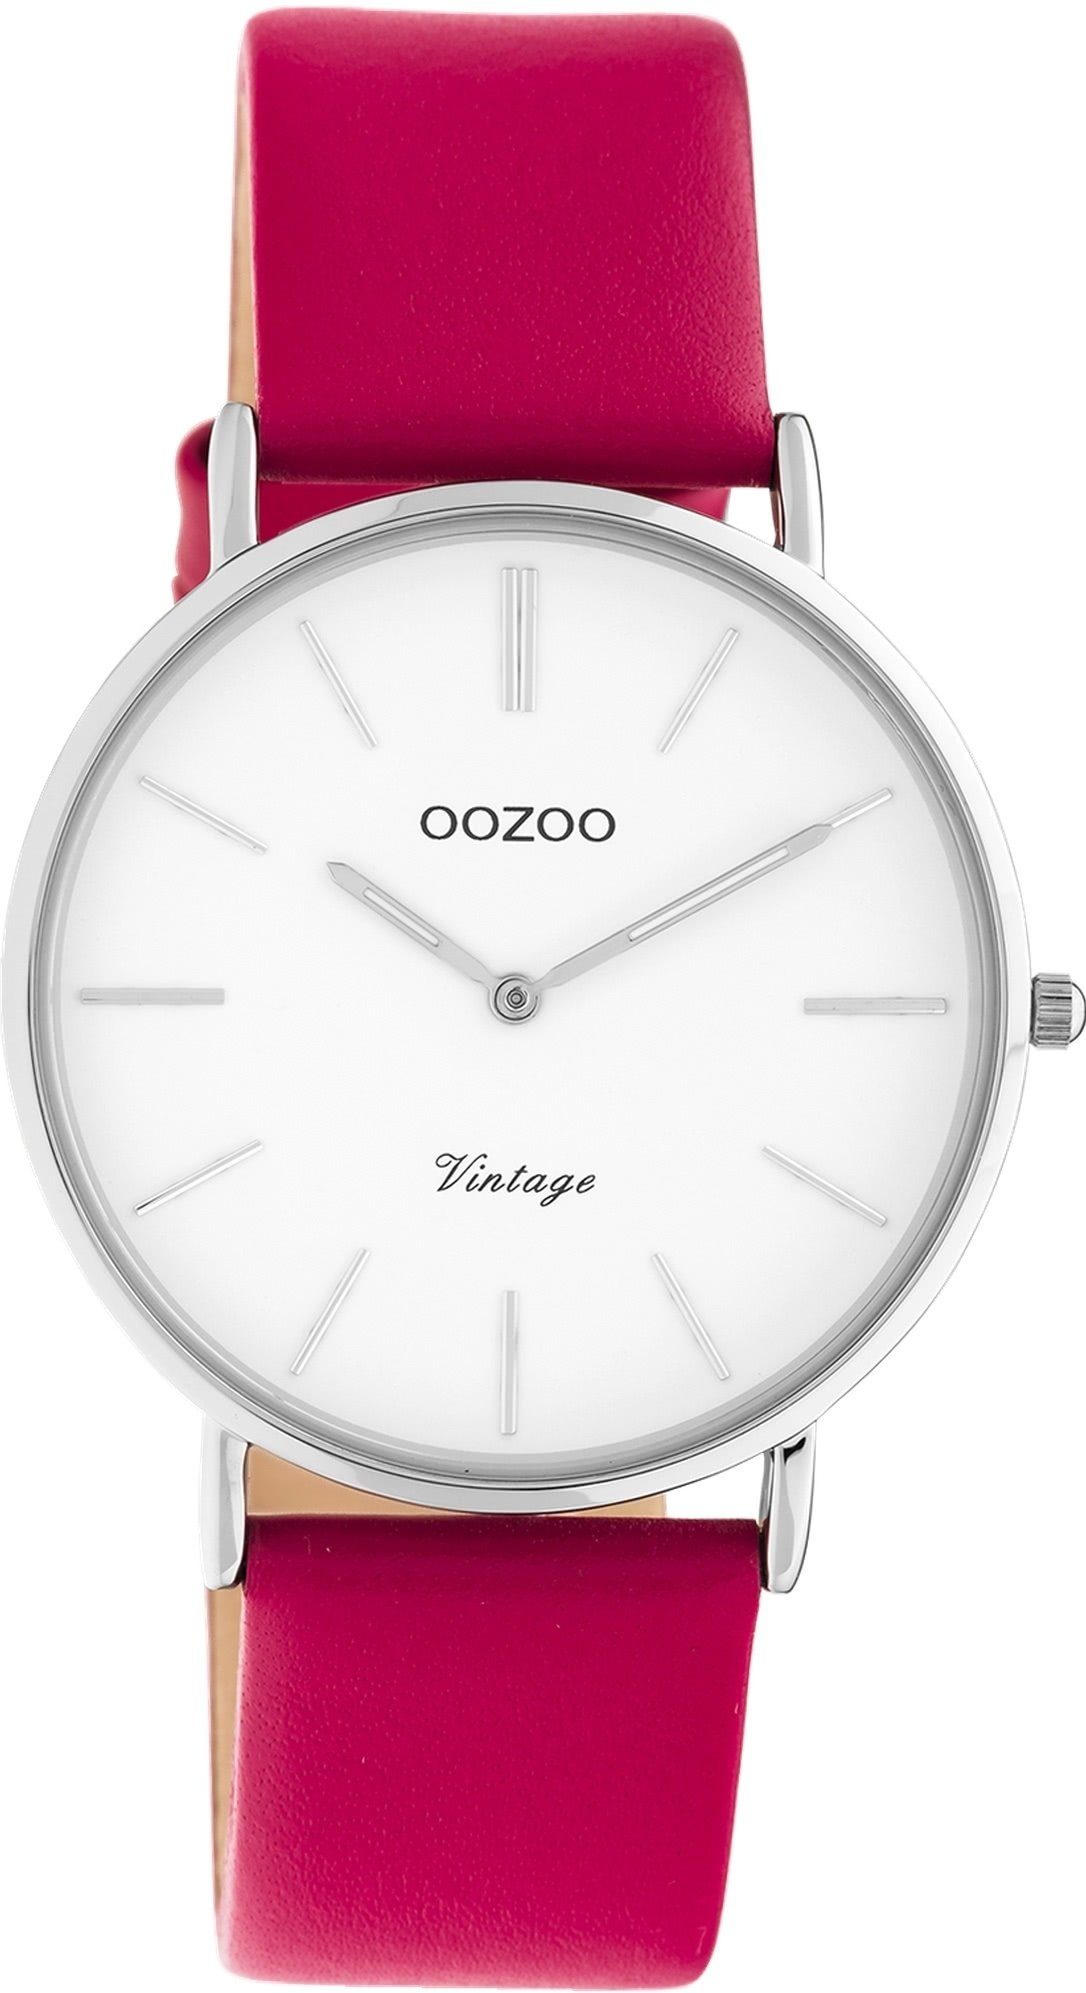 36mm) Damenuhr rund, rosa Quarzuhr Lederarmband, Analog, mittel (ca. Oozoo Armbanduhr OOZOO Fashion-Style Damen